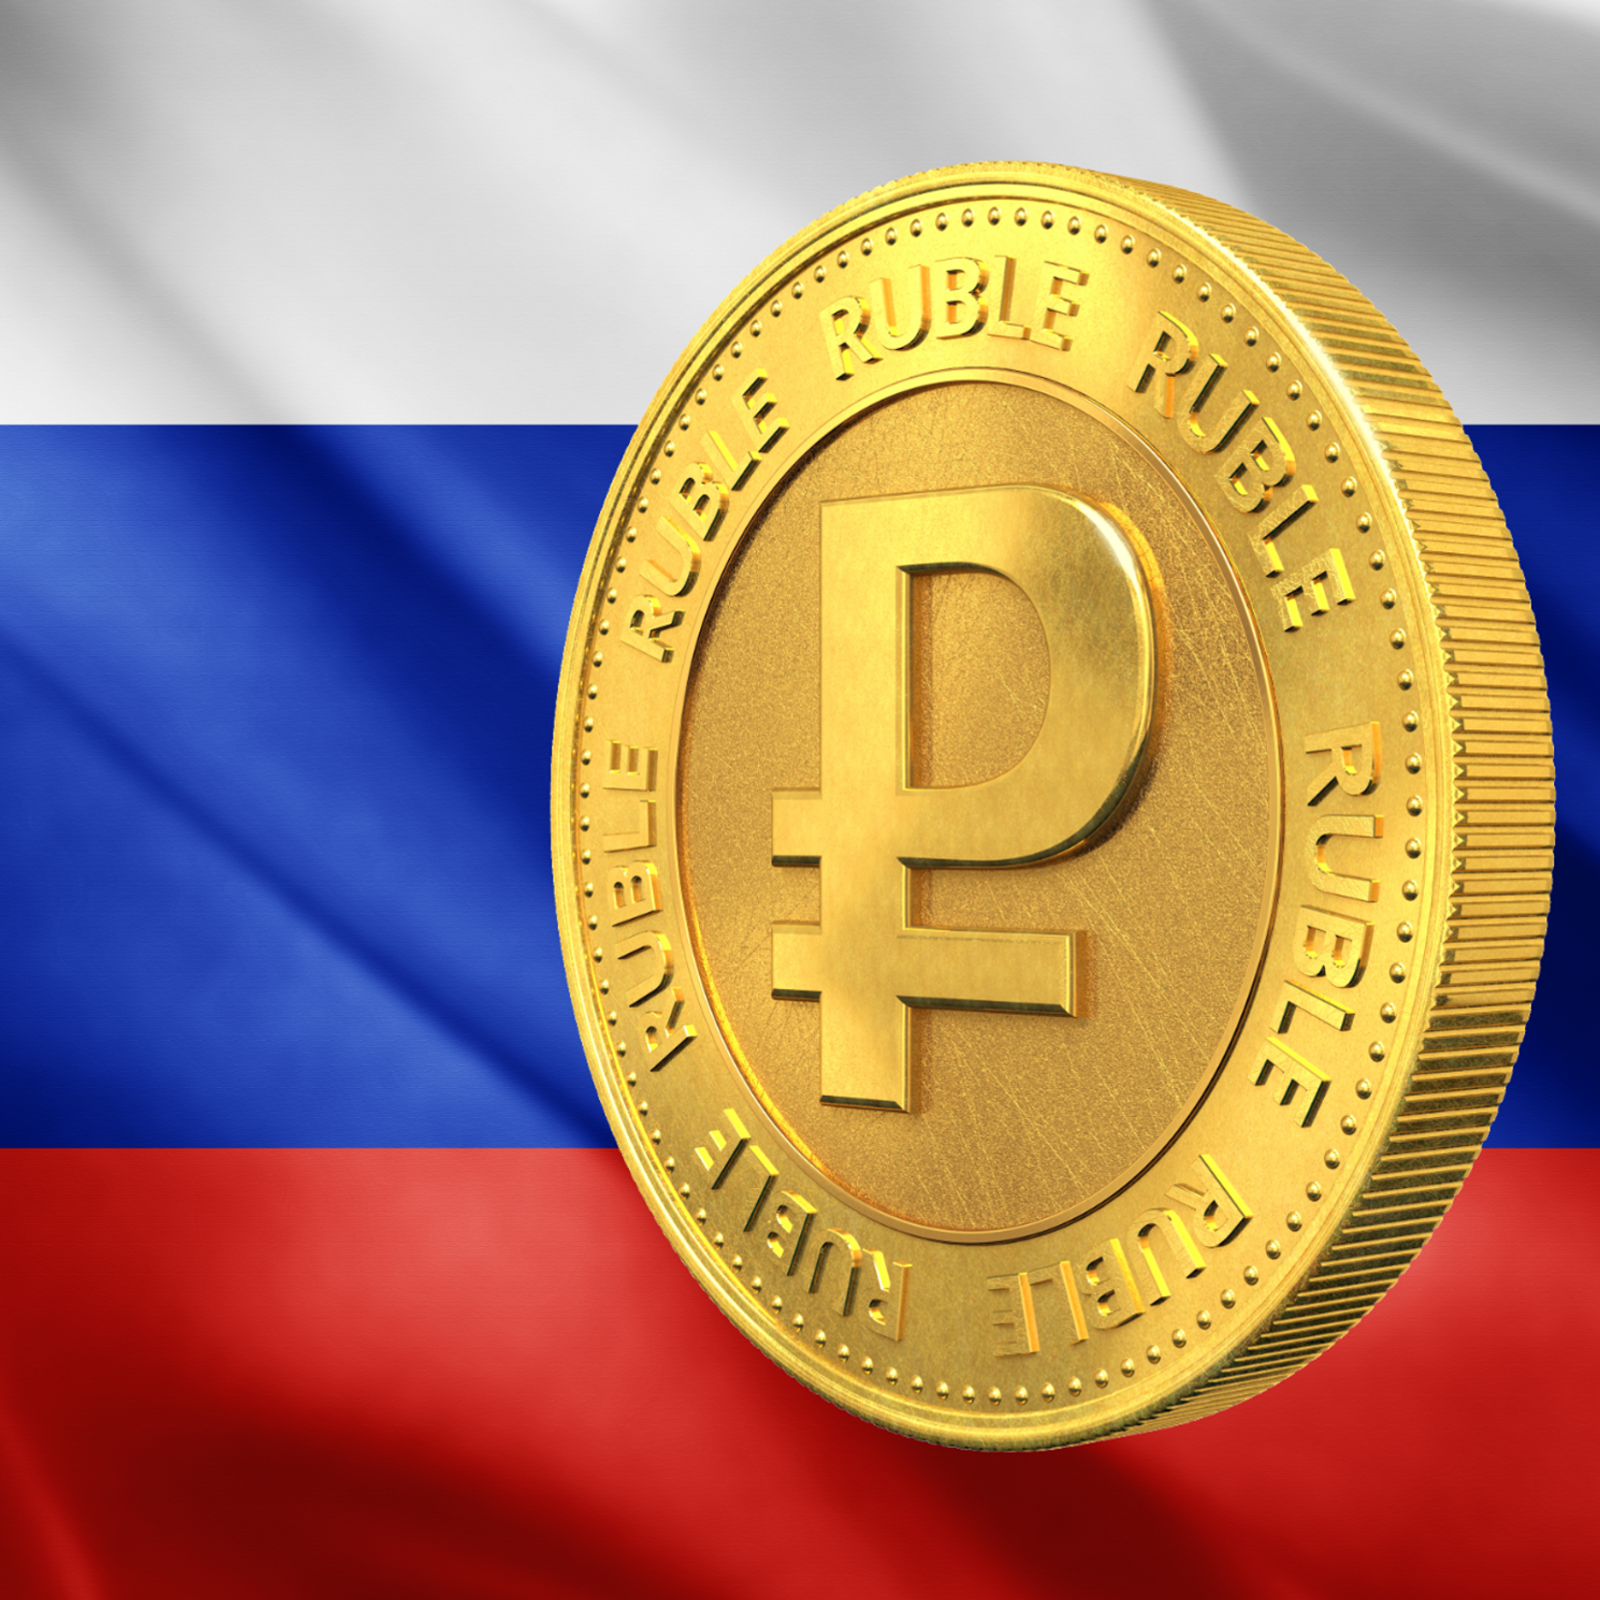 Crypto ruble coin 0.36437868 eth to btc